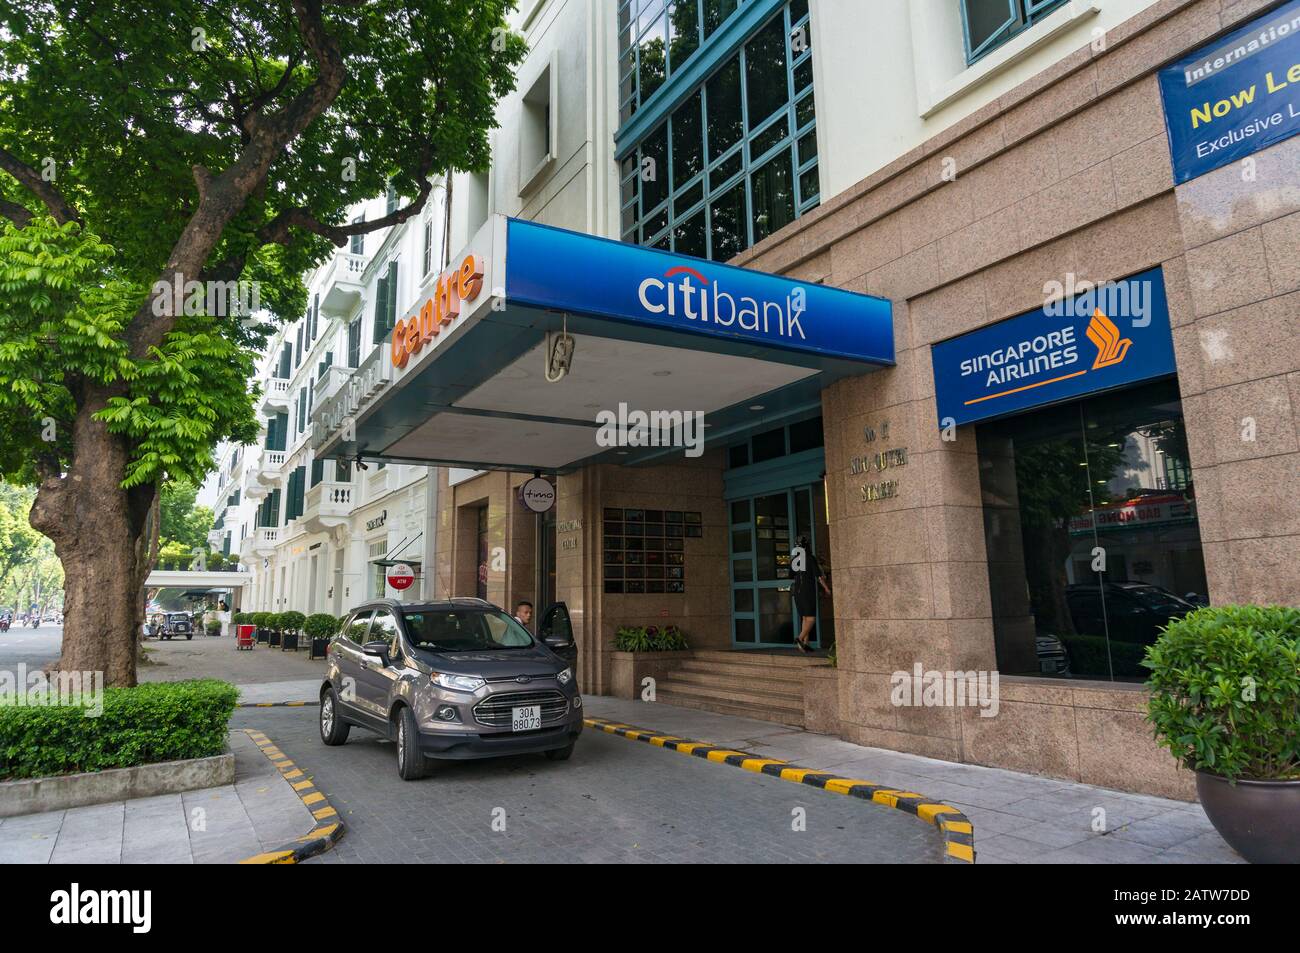 Hanoi, Vietnam - August 22, 2017: Citibank sign and logo in Hanoi, Vietnam. Citibank is a major international bank Stock Photo